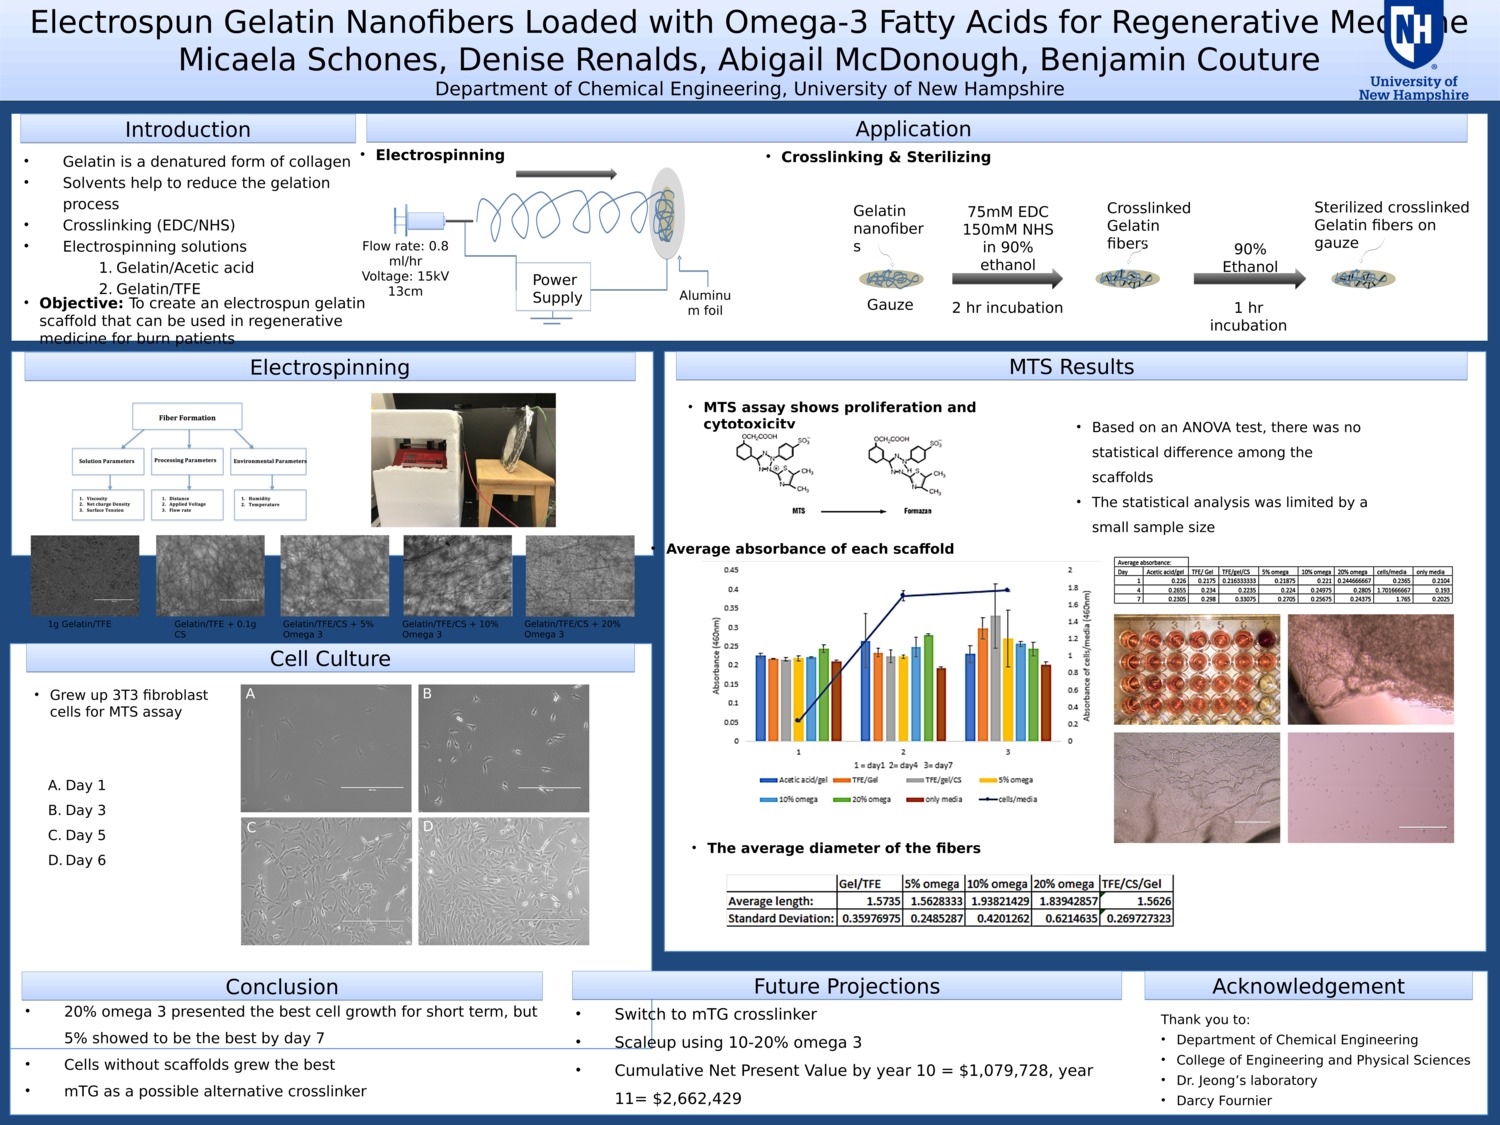 Electrospun Gelatin Nanofibers Loaded With Omega-3 Fatty Acids For Regenerative Medicine by ms2020